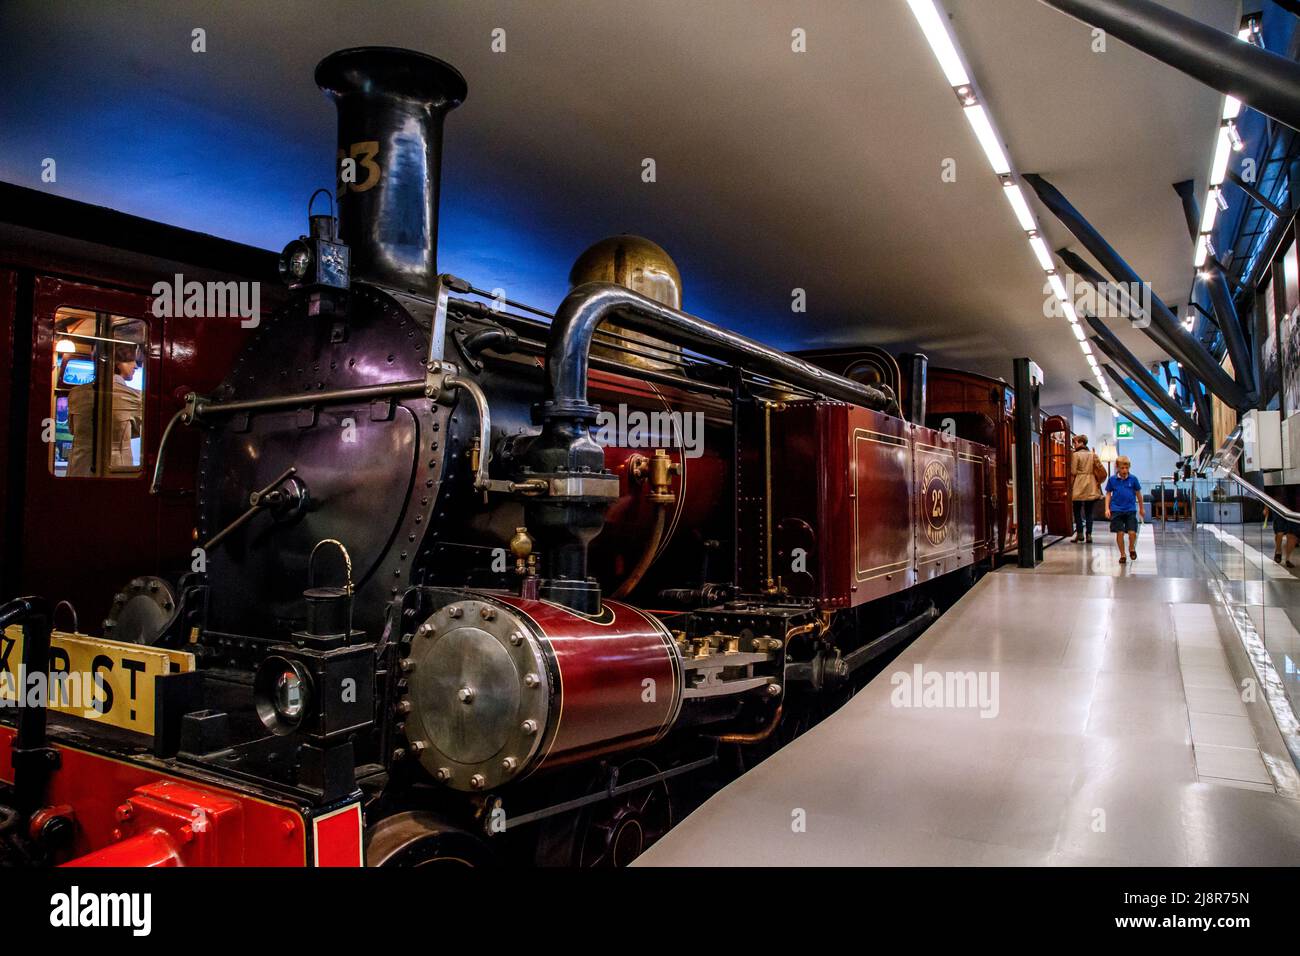 Steam museum in london фото 7